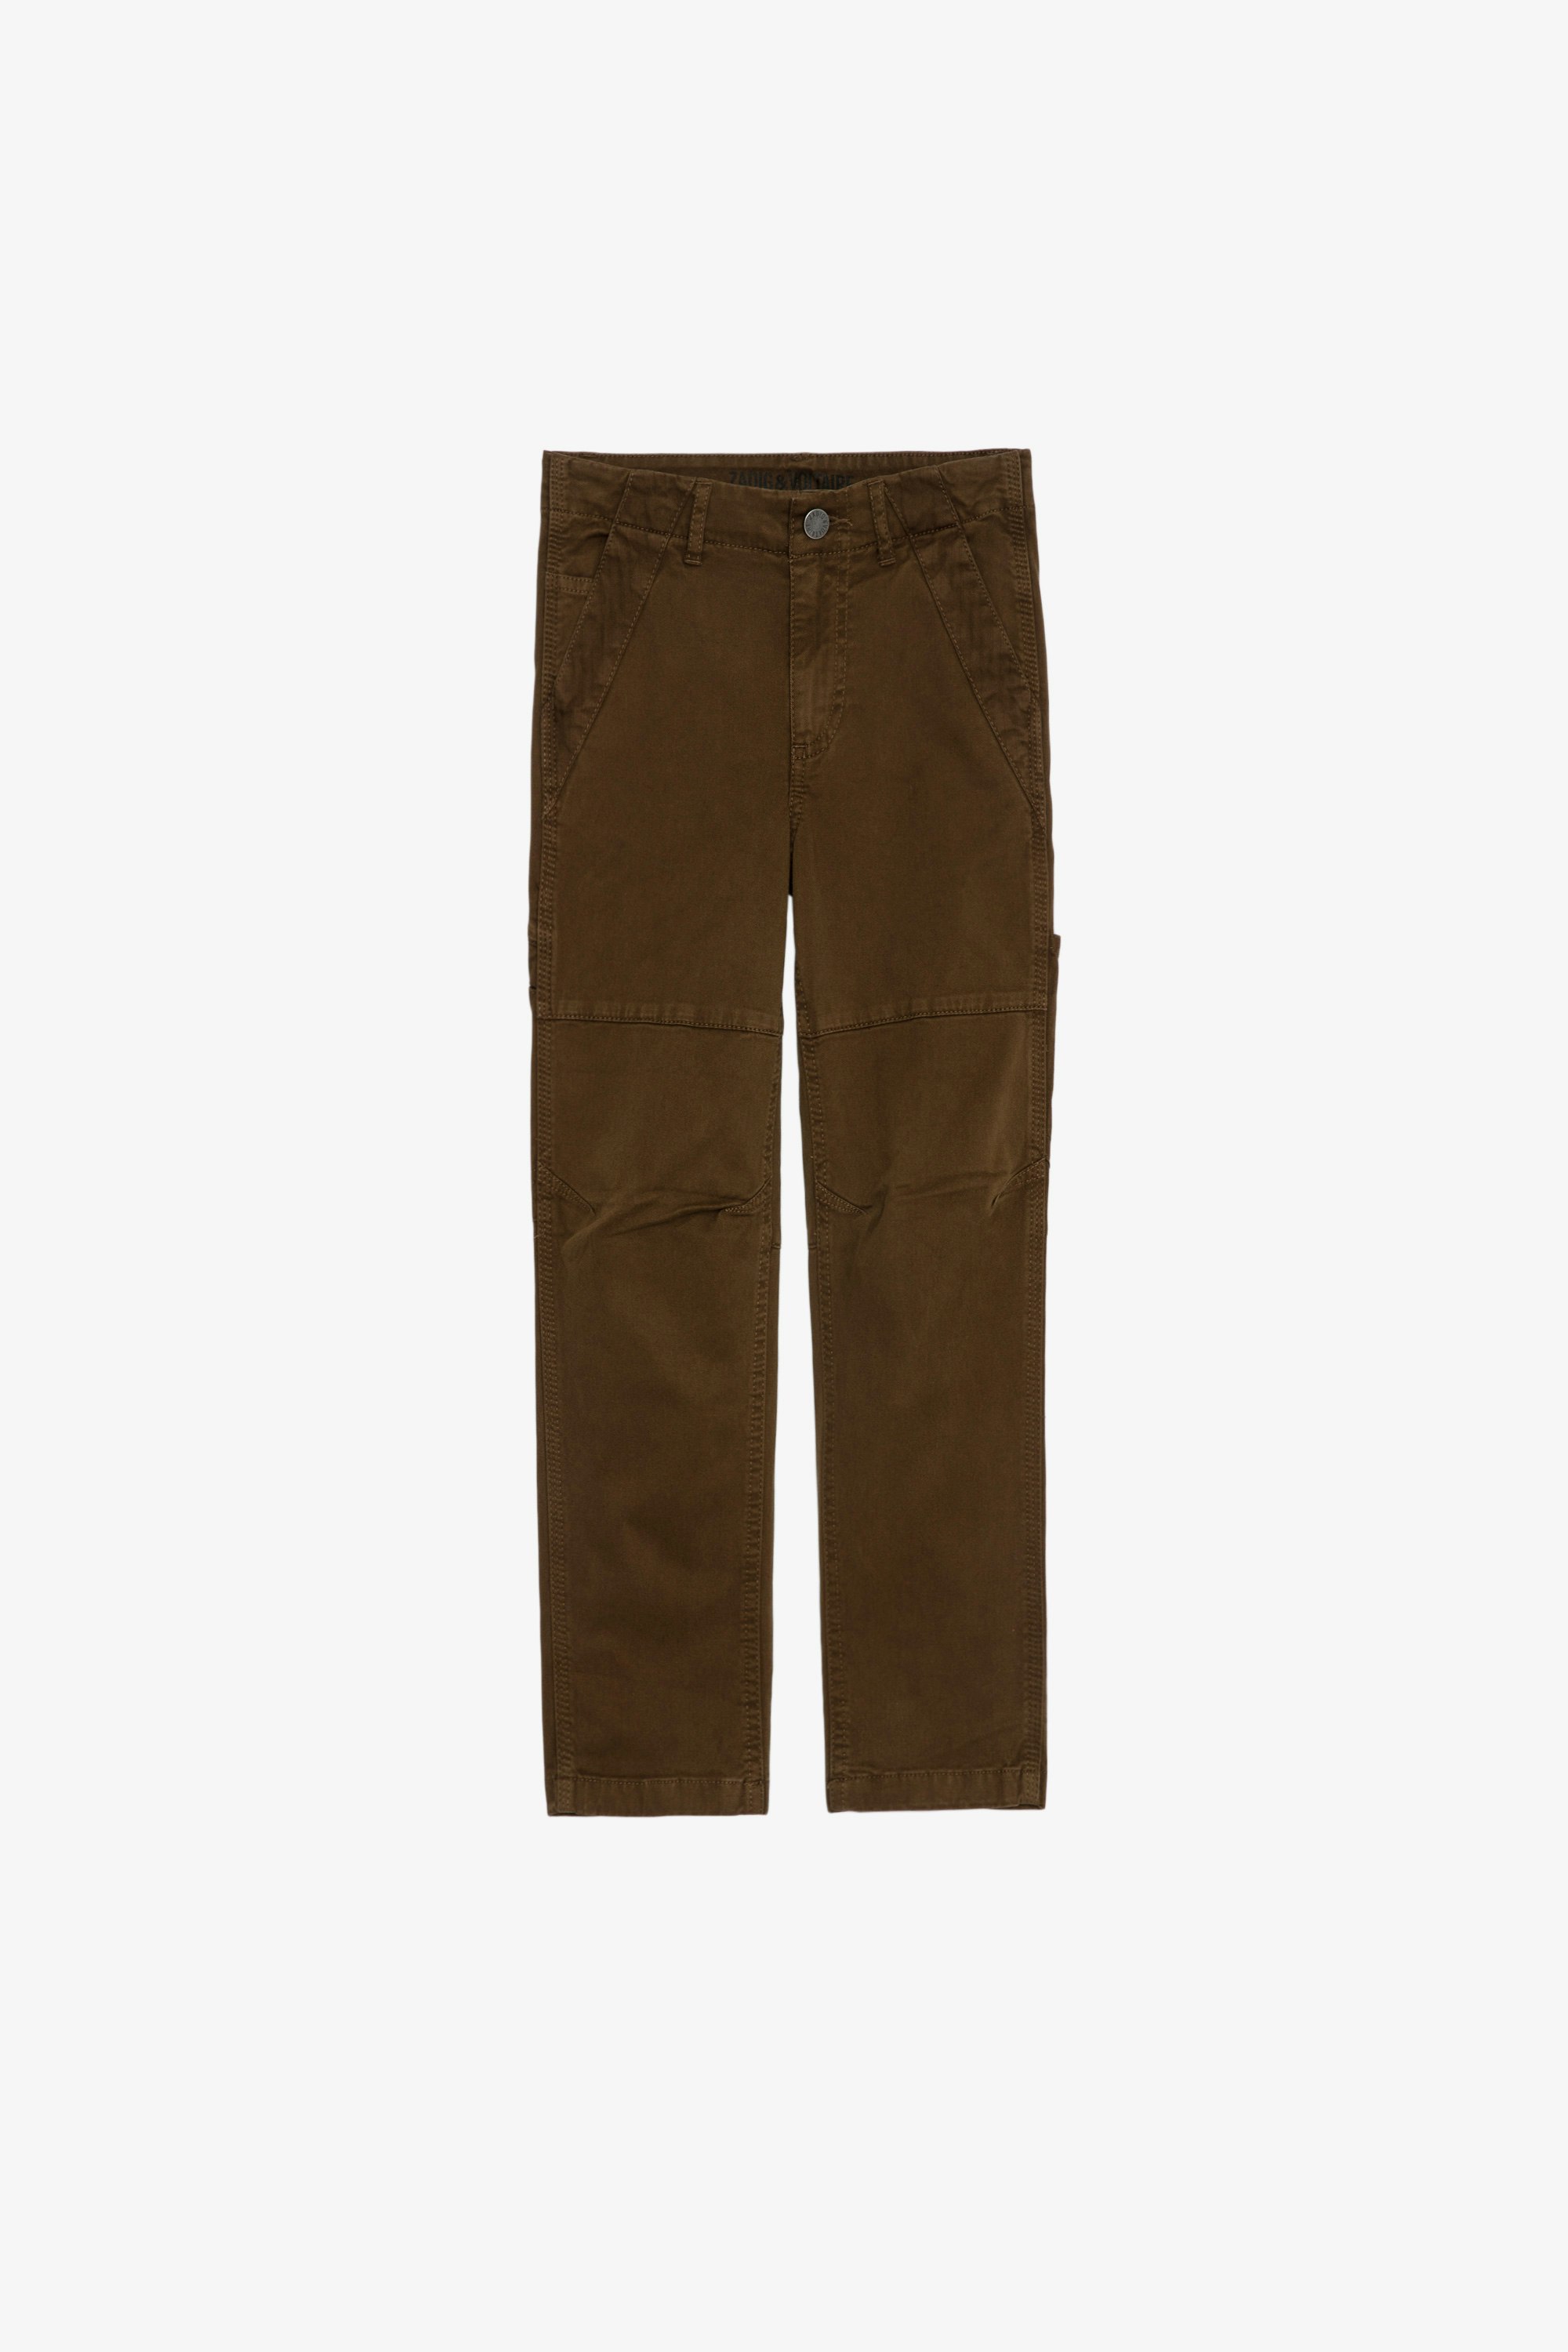 Theo Children’s Trousers Children’s khaki cotton trousers 